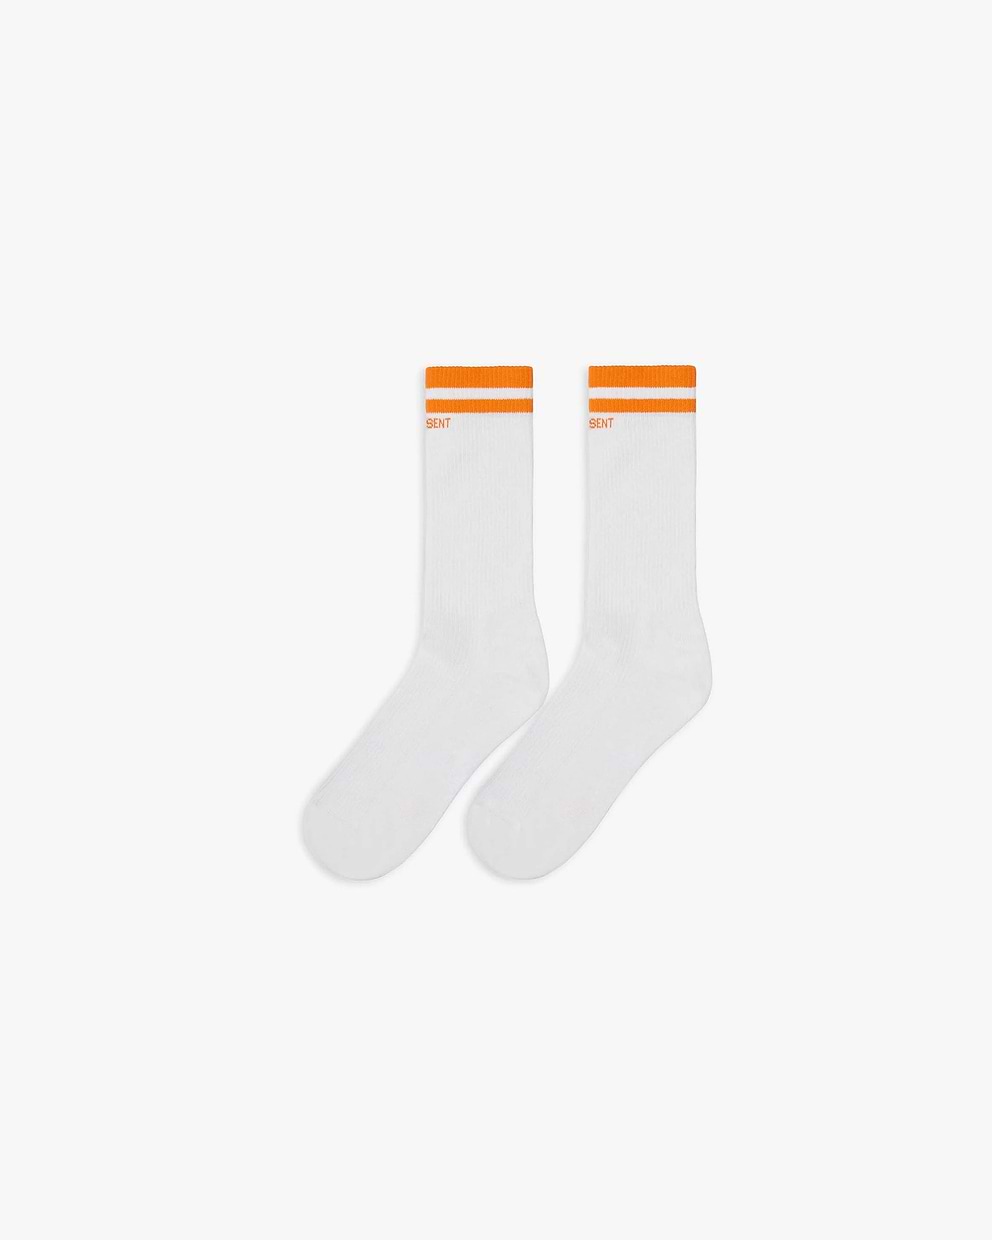 Represent College Socks - Neon Orange